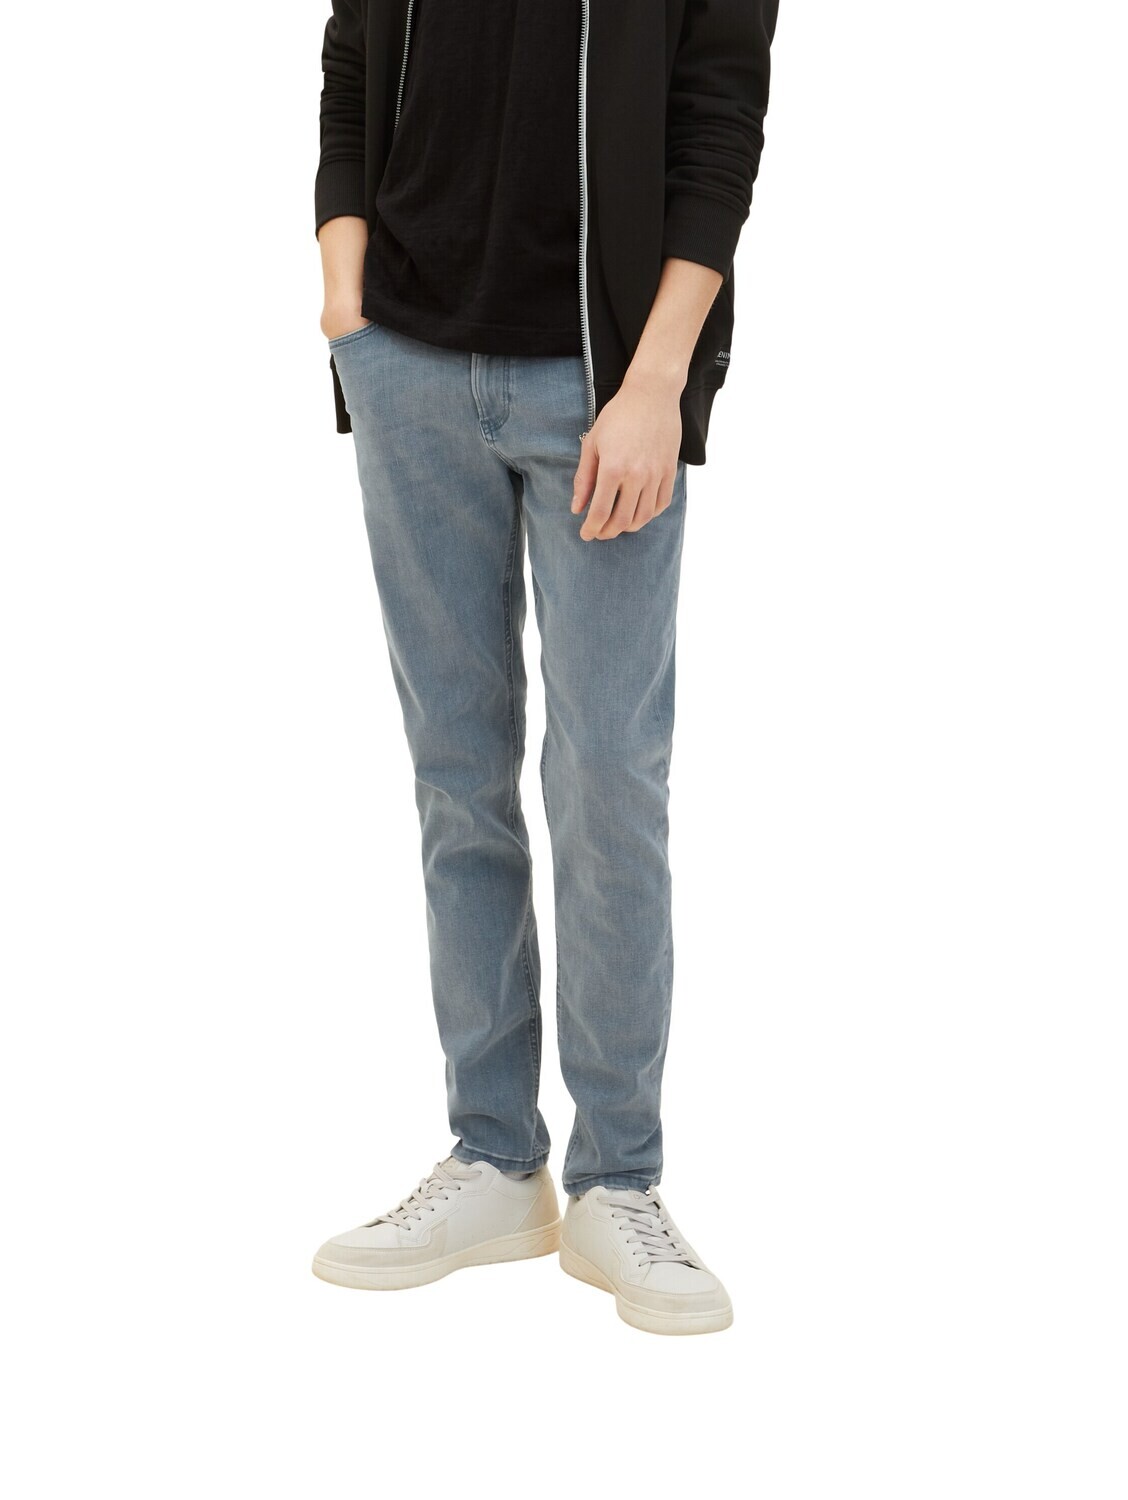 Tom Tailor spijkerbroek, blue grey denim, Size: 30"32"